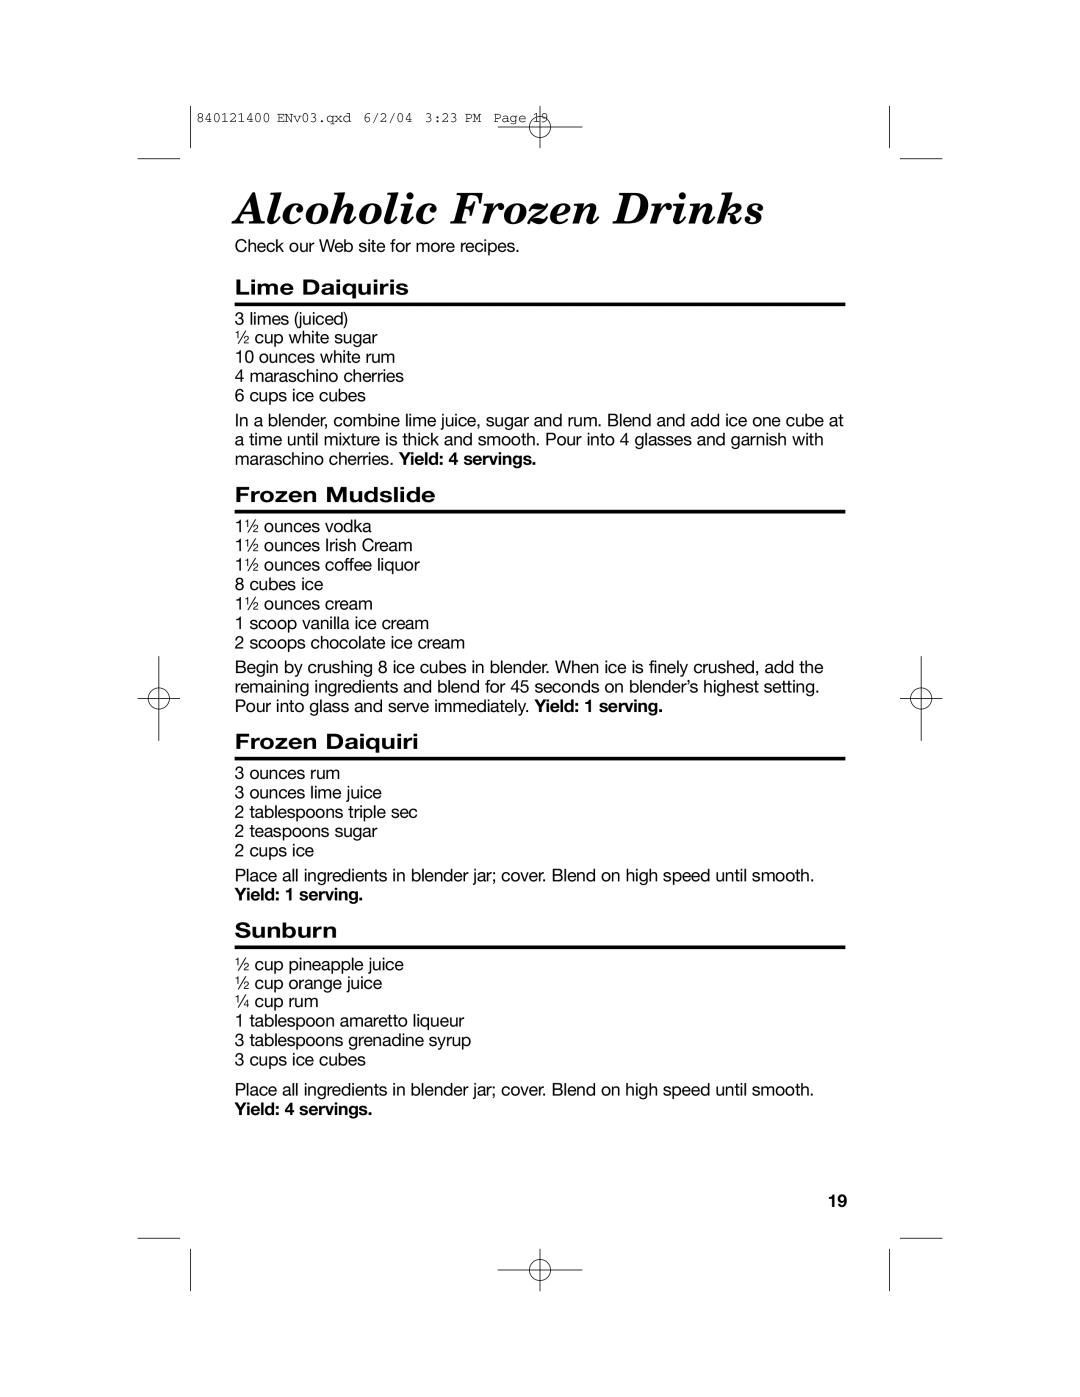 Hamilton Beach All-Metal Blender manual Alcoholic Frozen Drinks, Lime Daiquiris, Frozen Mudslide, Frozen Daiquiri, Sunburn 